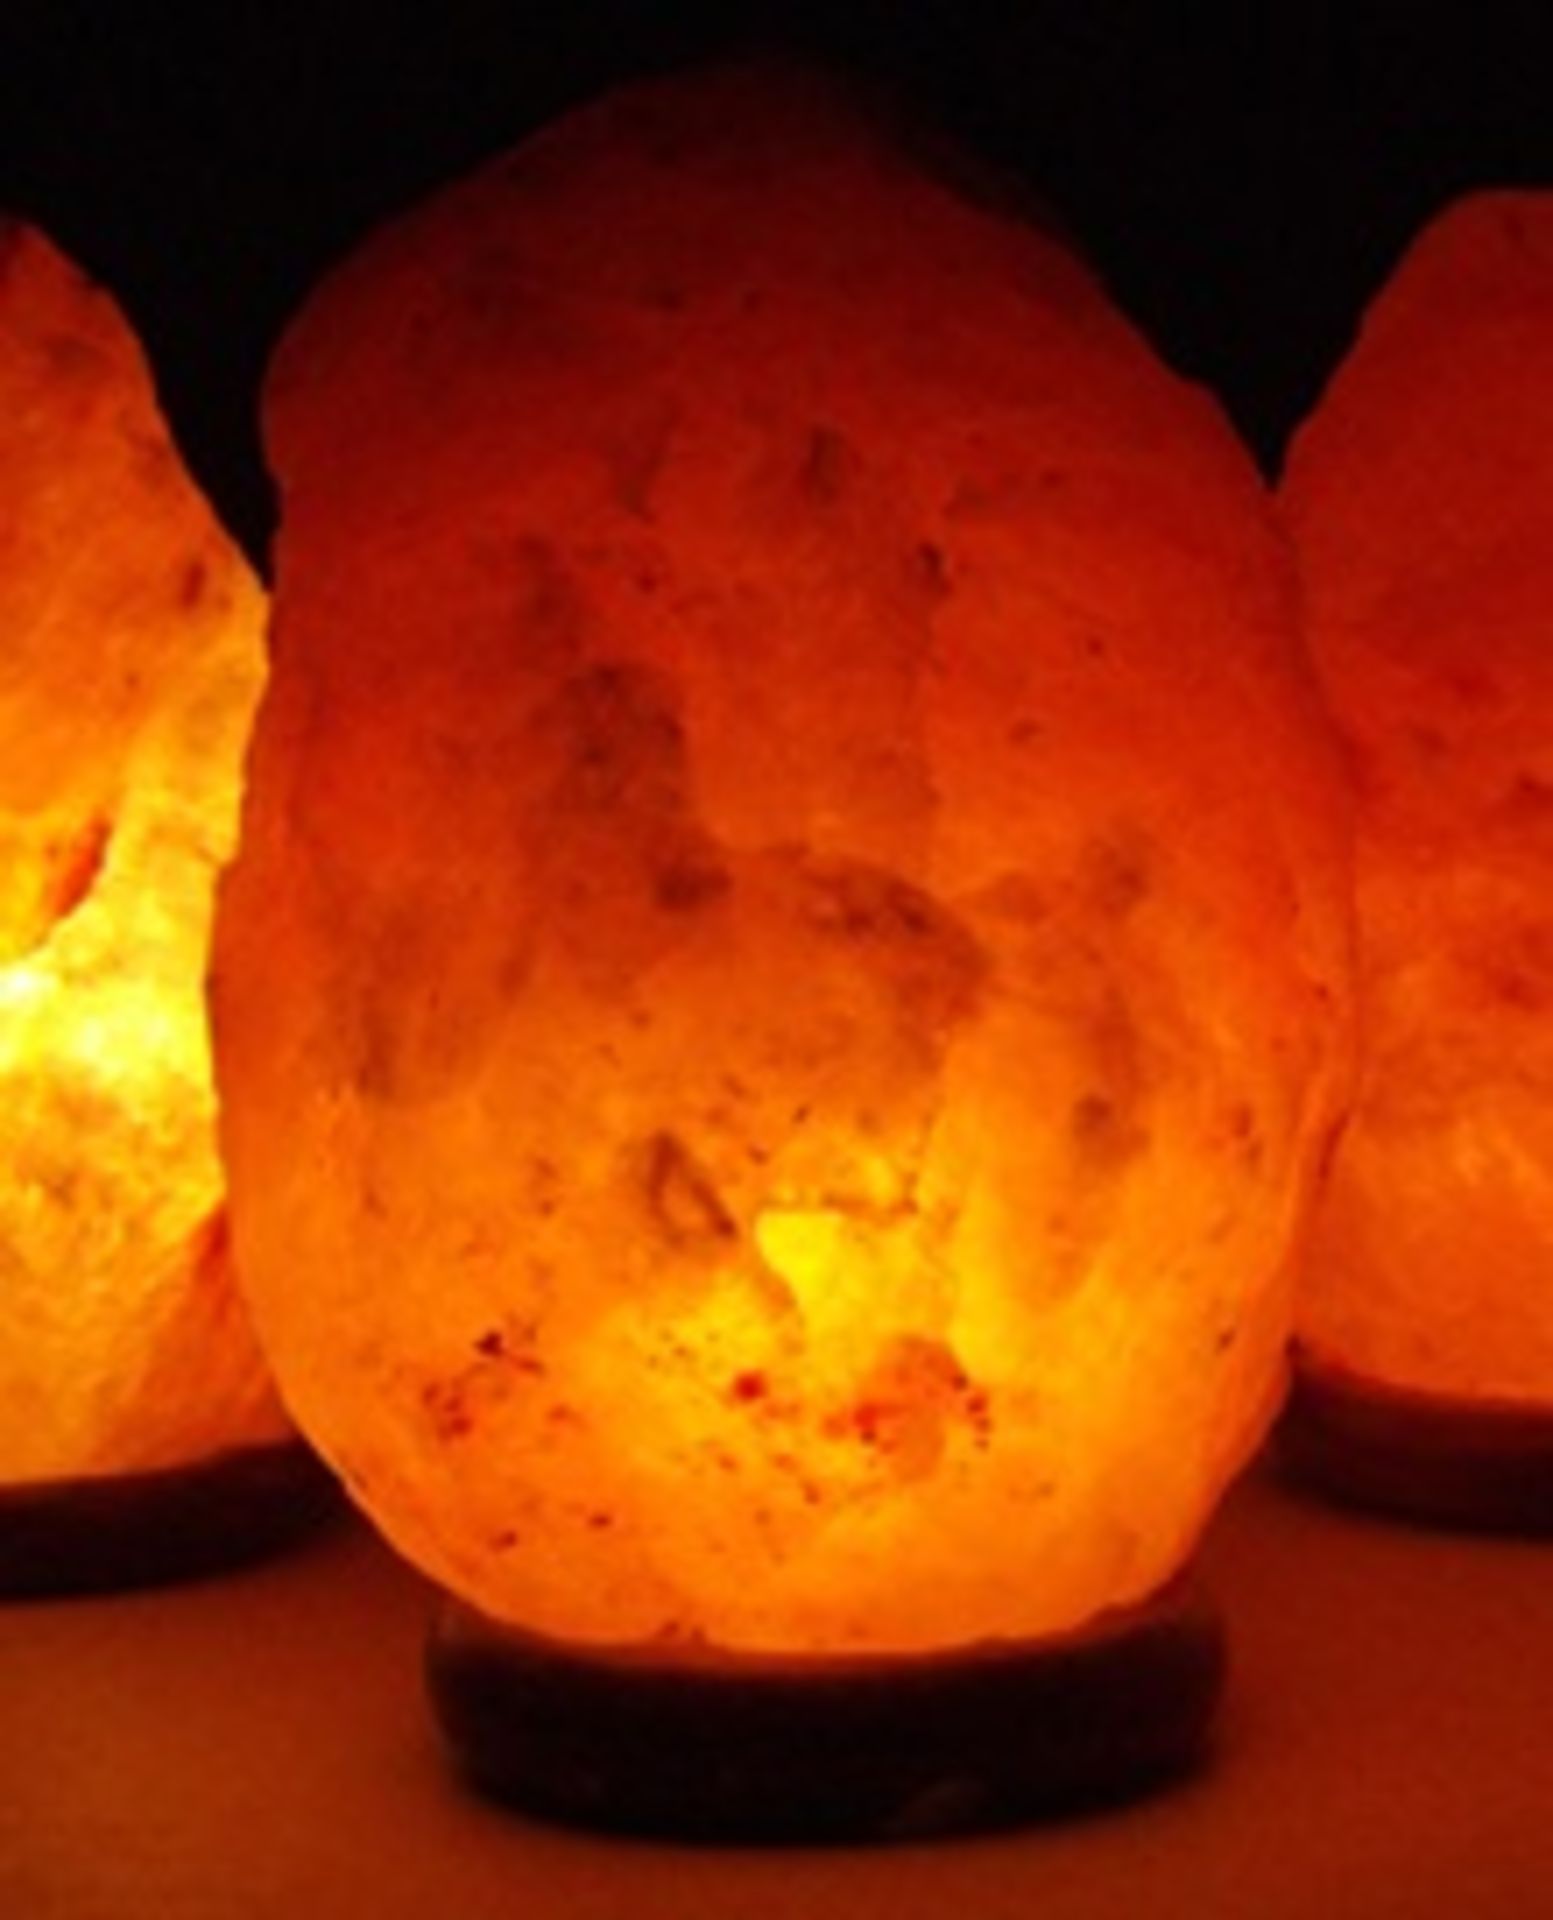 4 x Natural Himalayan Crystal Salt Lamp - Natural Therapeutic Ionizing Healing Lamp - 2-3KG - Approx